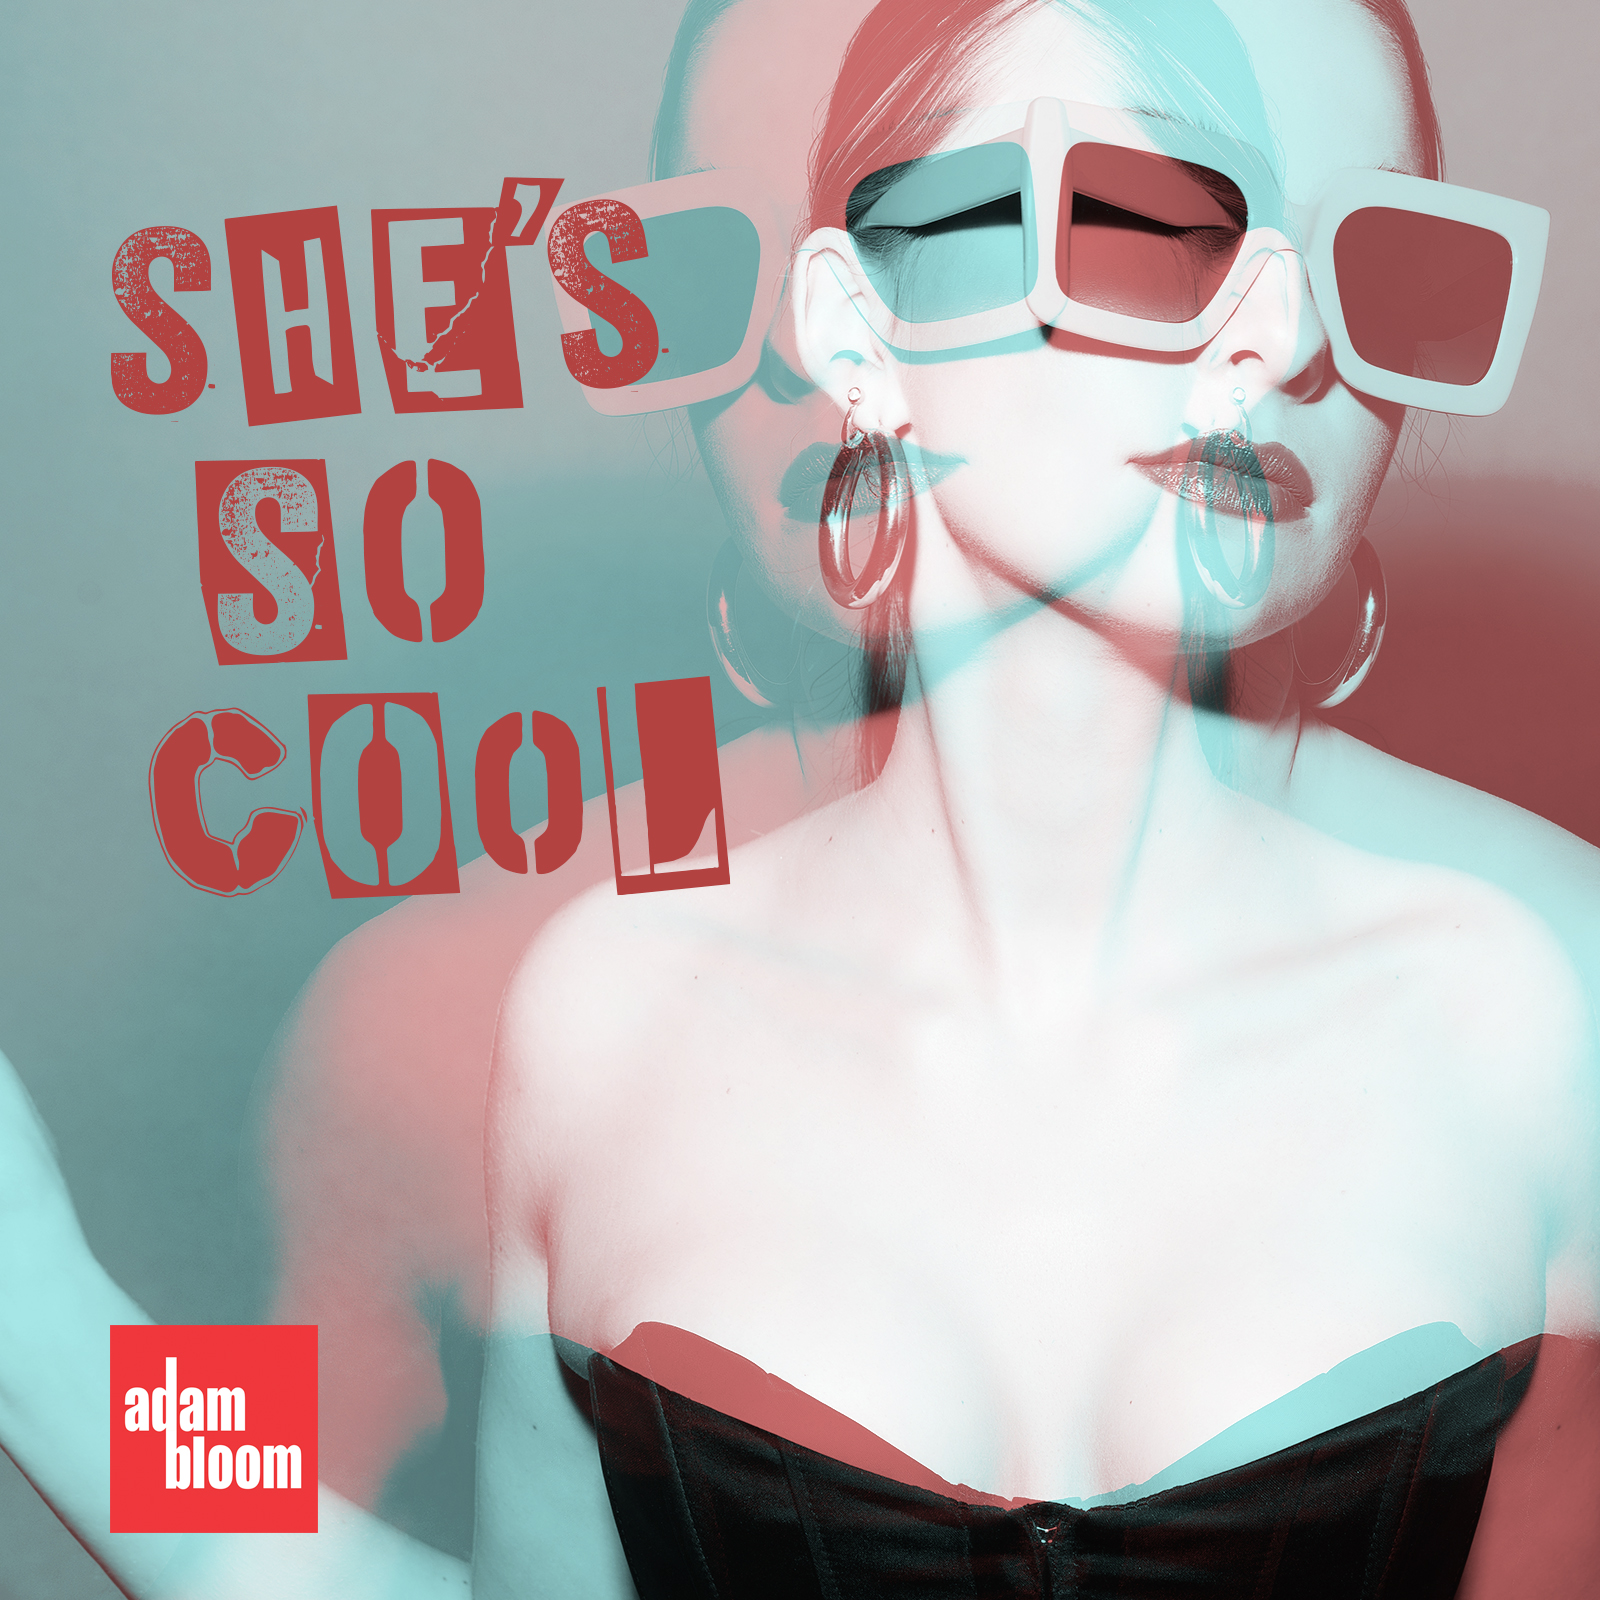 Adam Bloom "She's So Cool" Album Cover